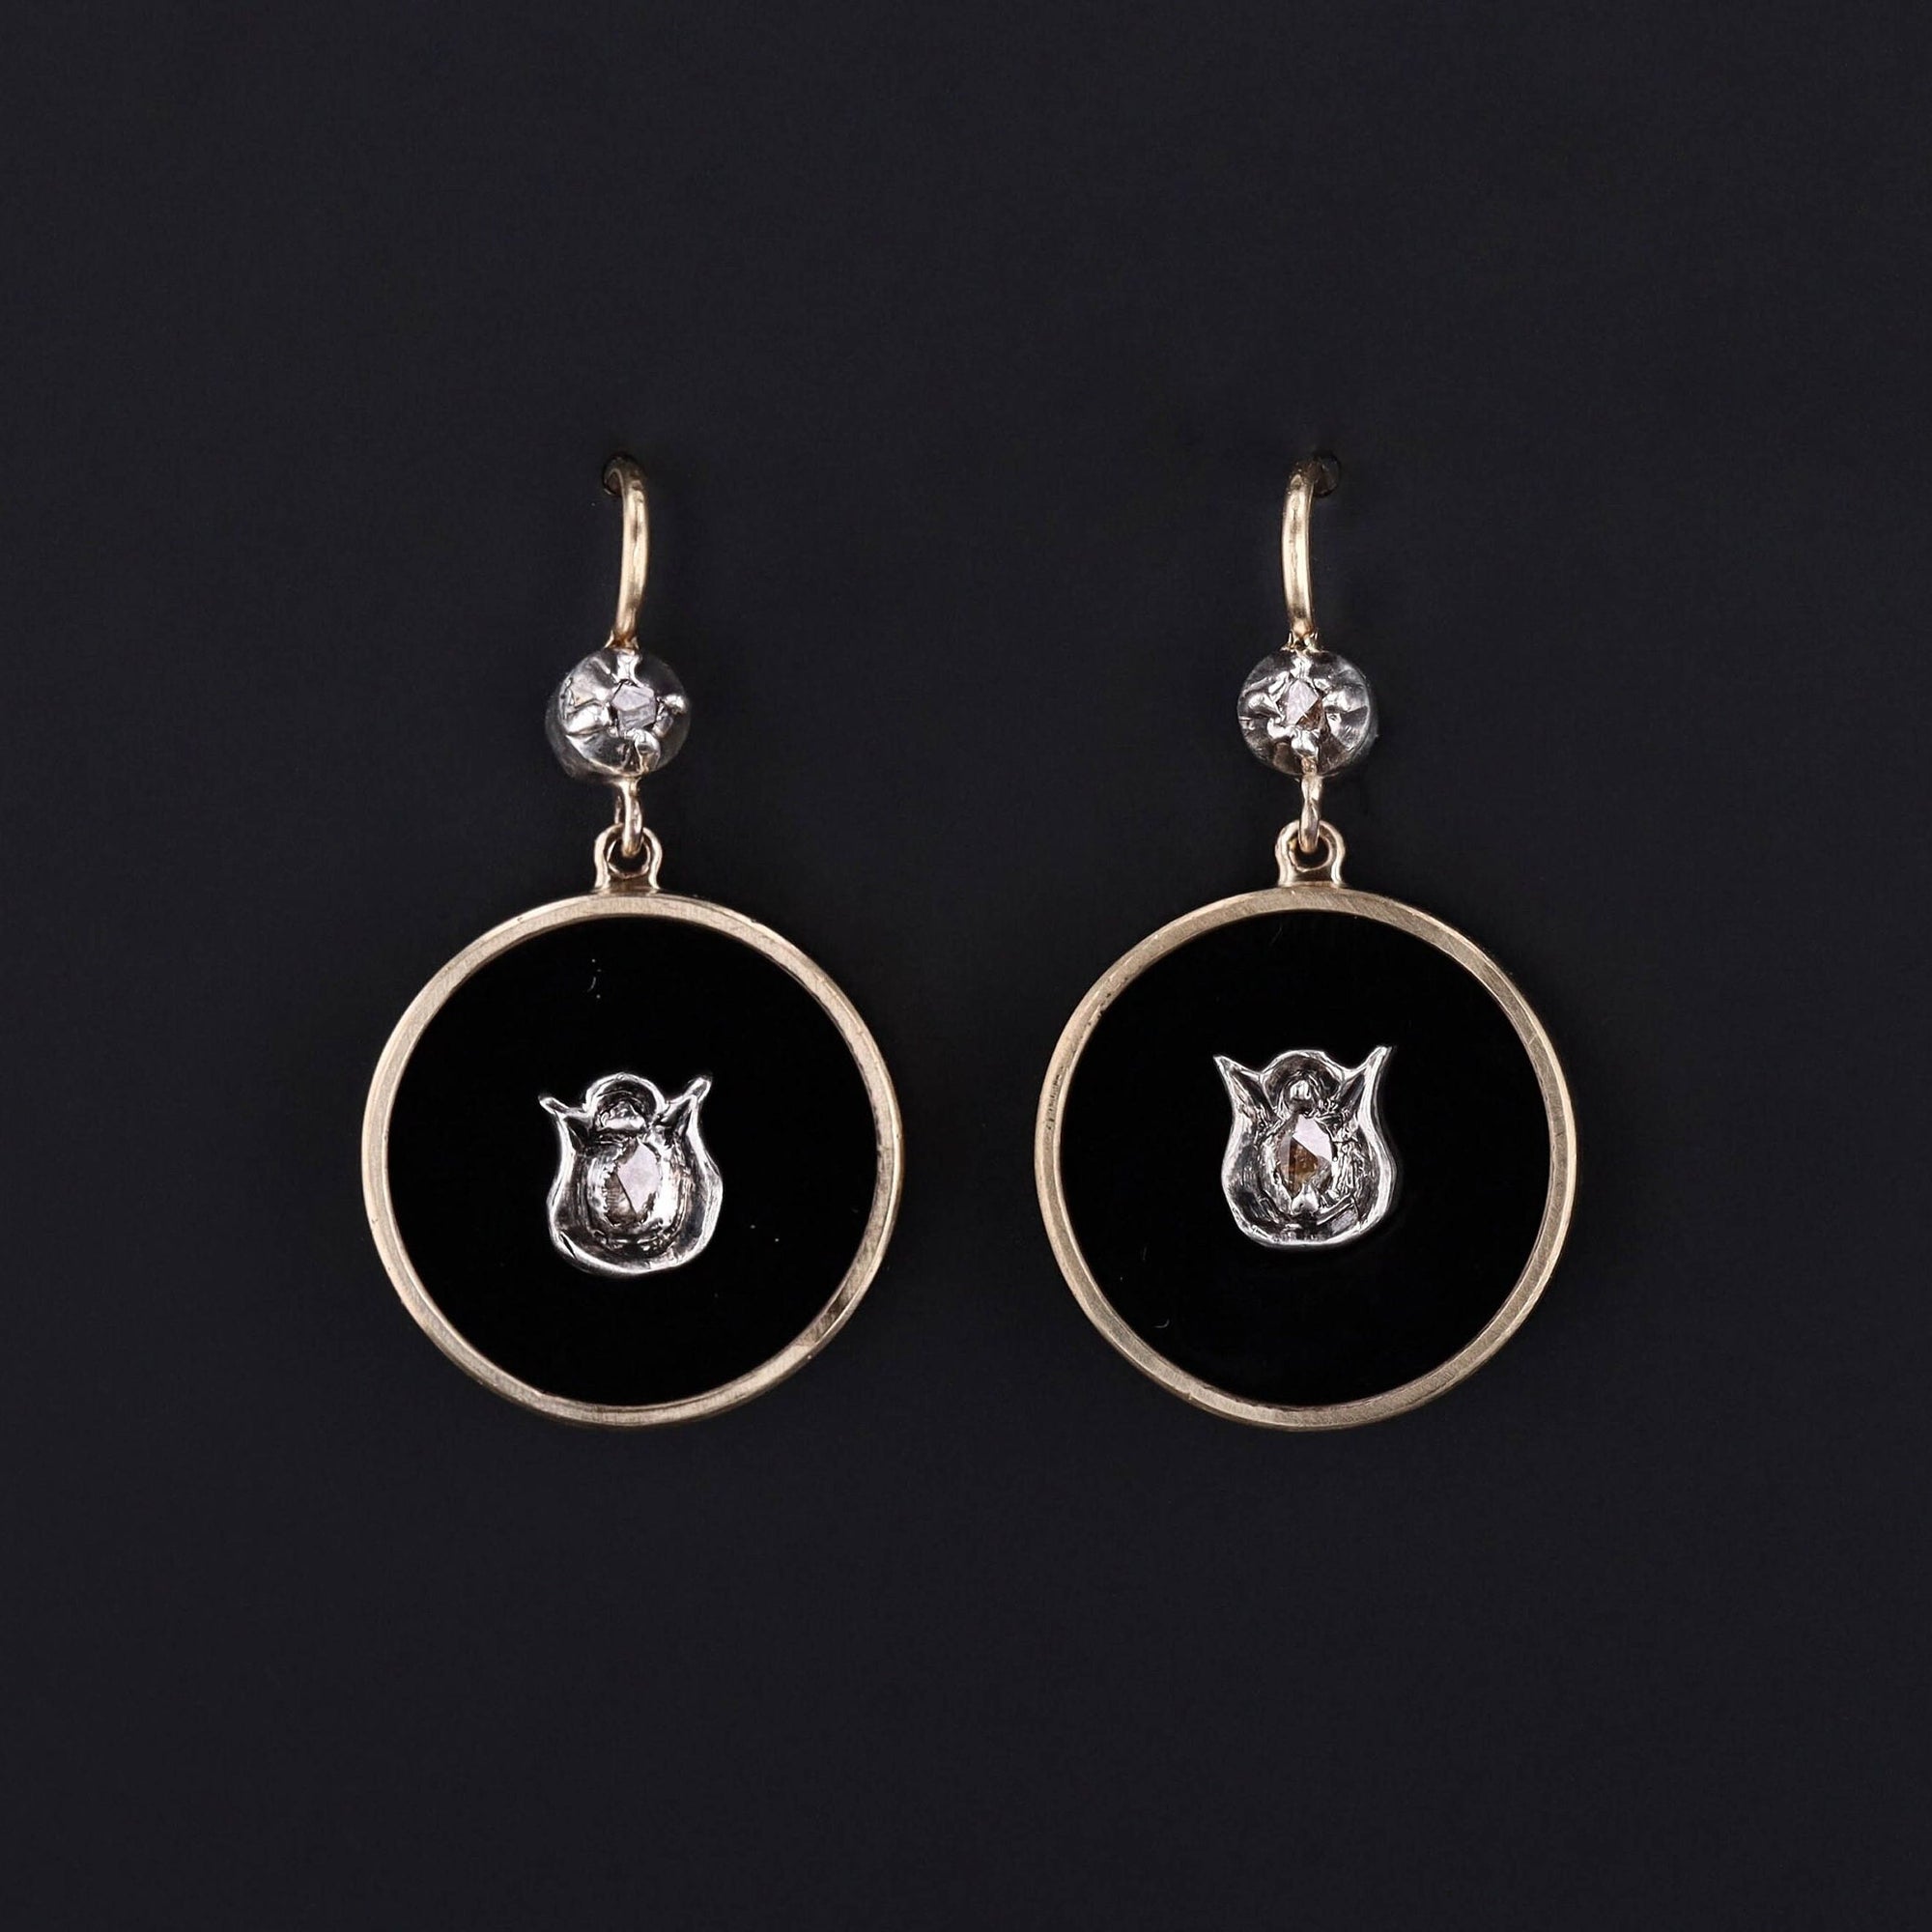 Onyx and Diamond Earrings of 14k Gold